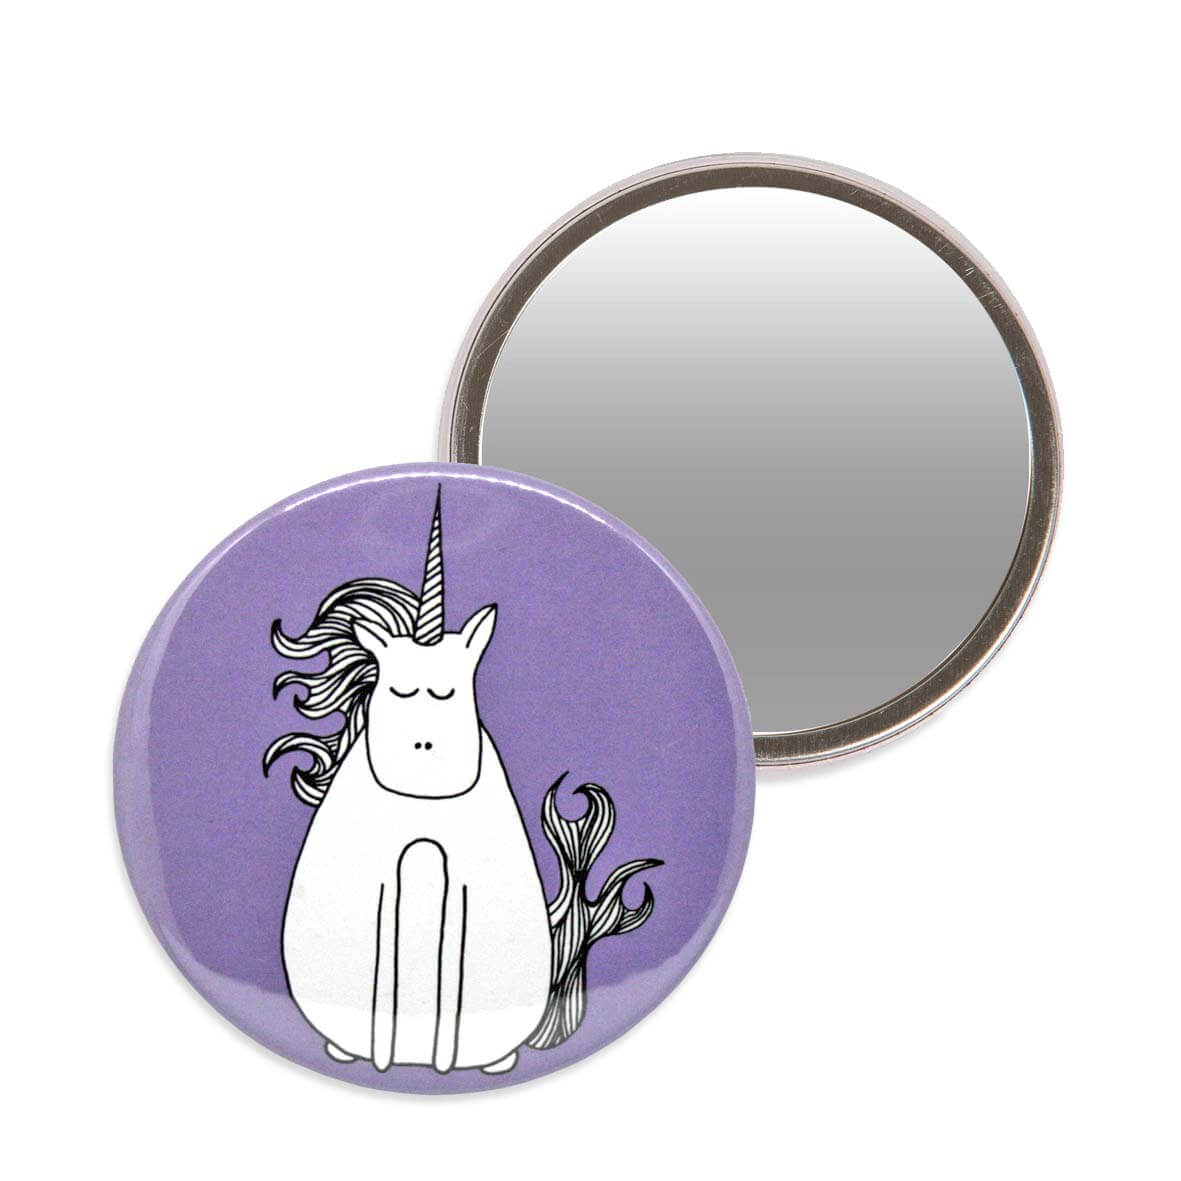 Purple makeup mirror with an illustration of a unicorn. 7.6cm diameter